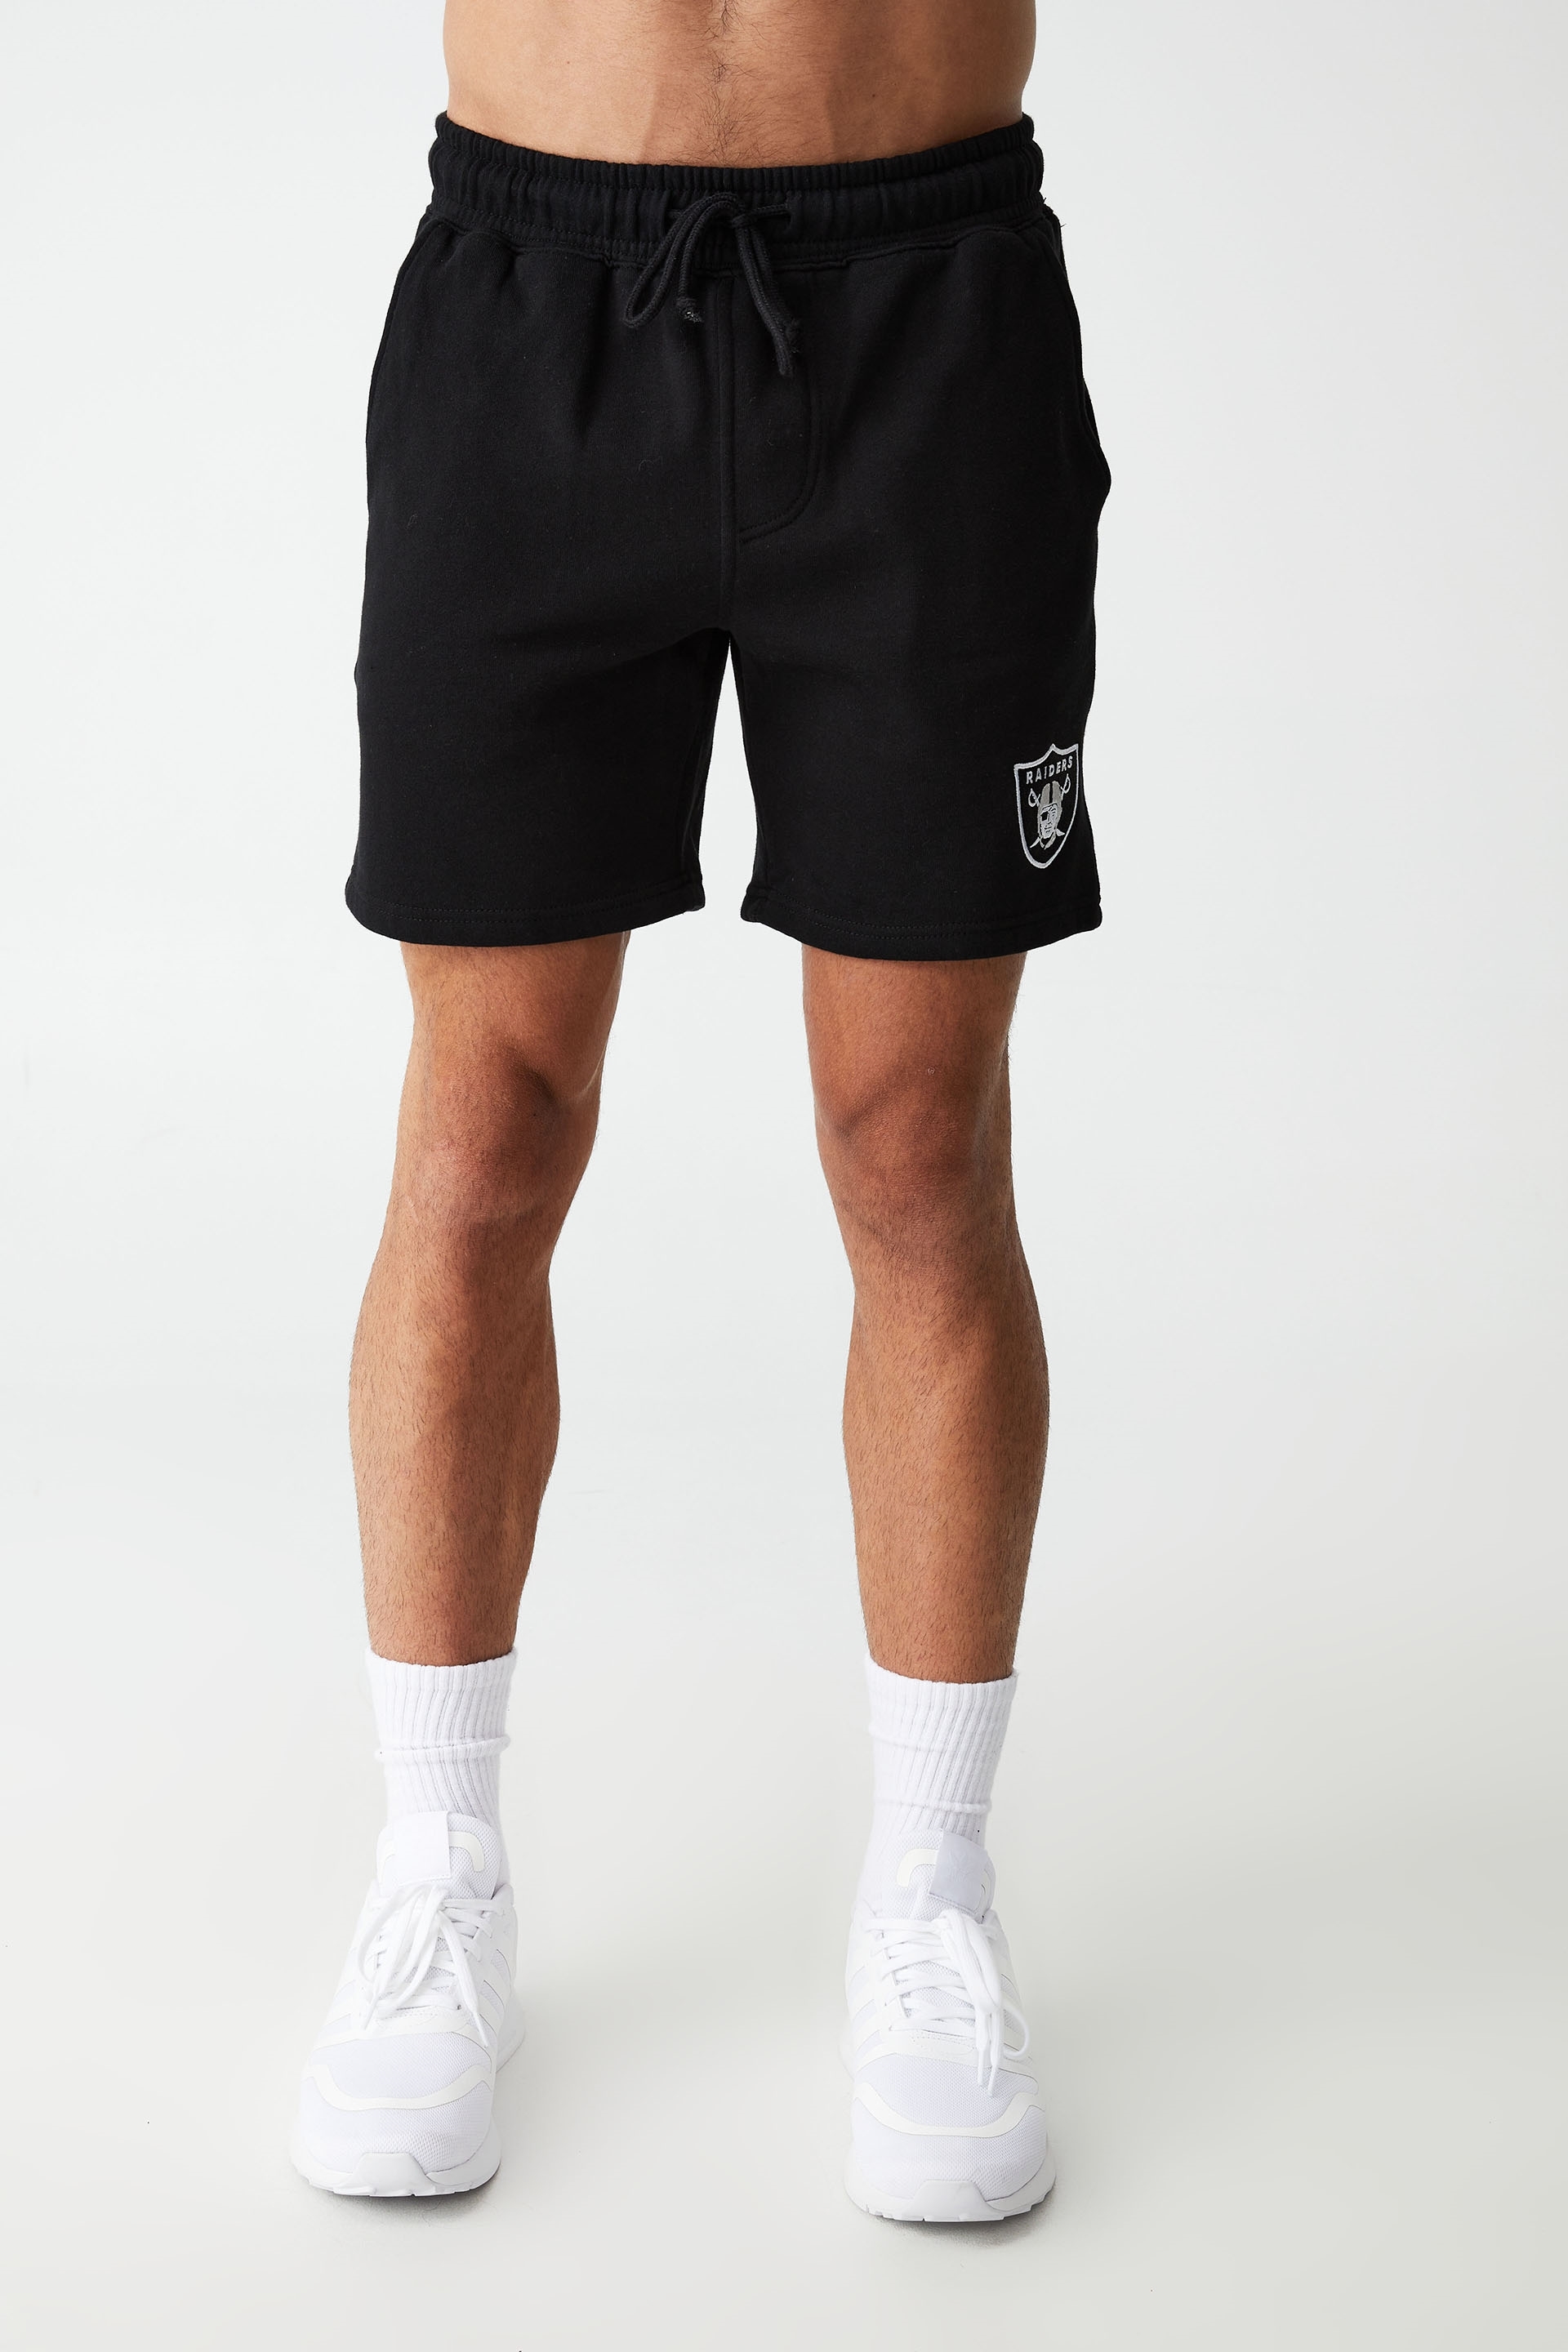 nike raiders shorts